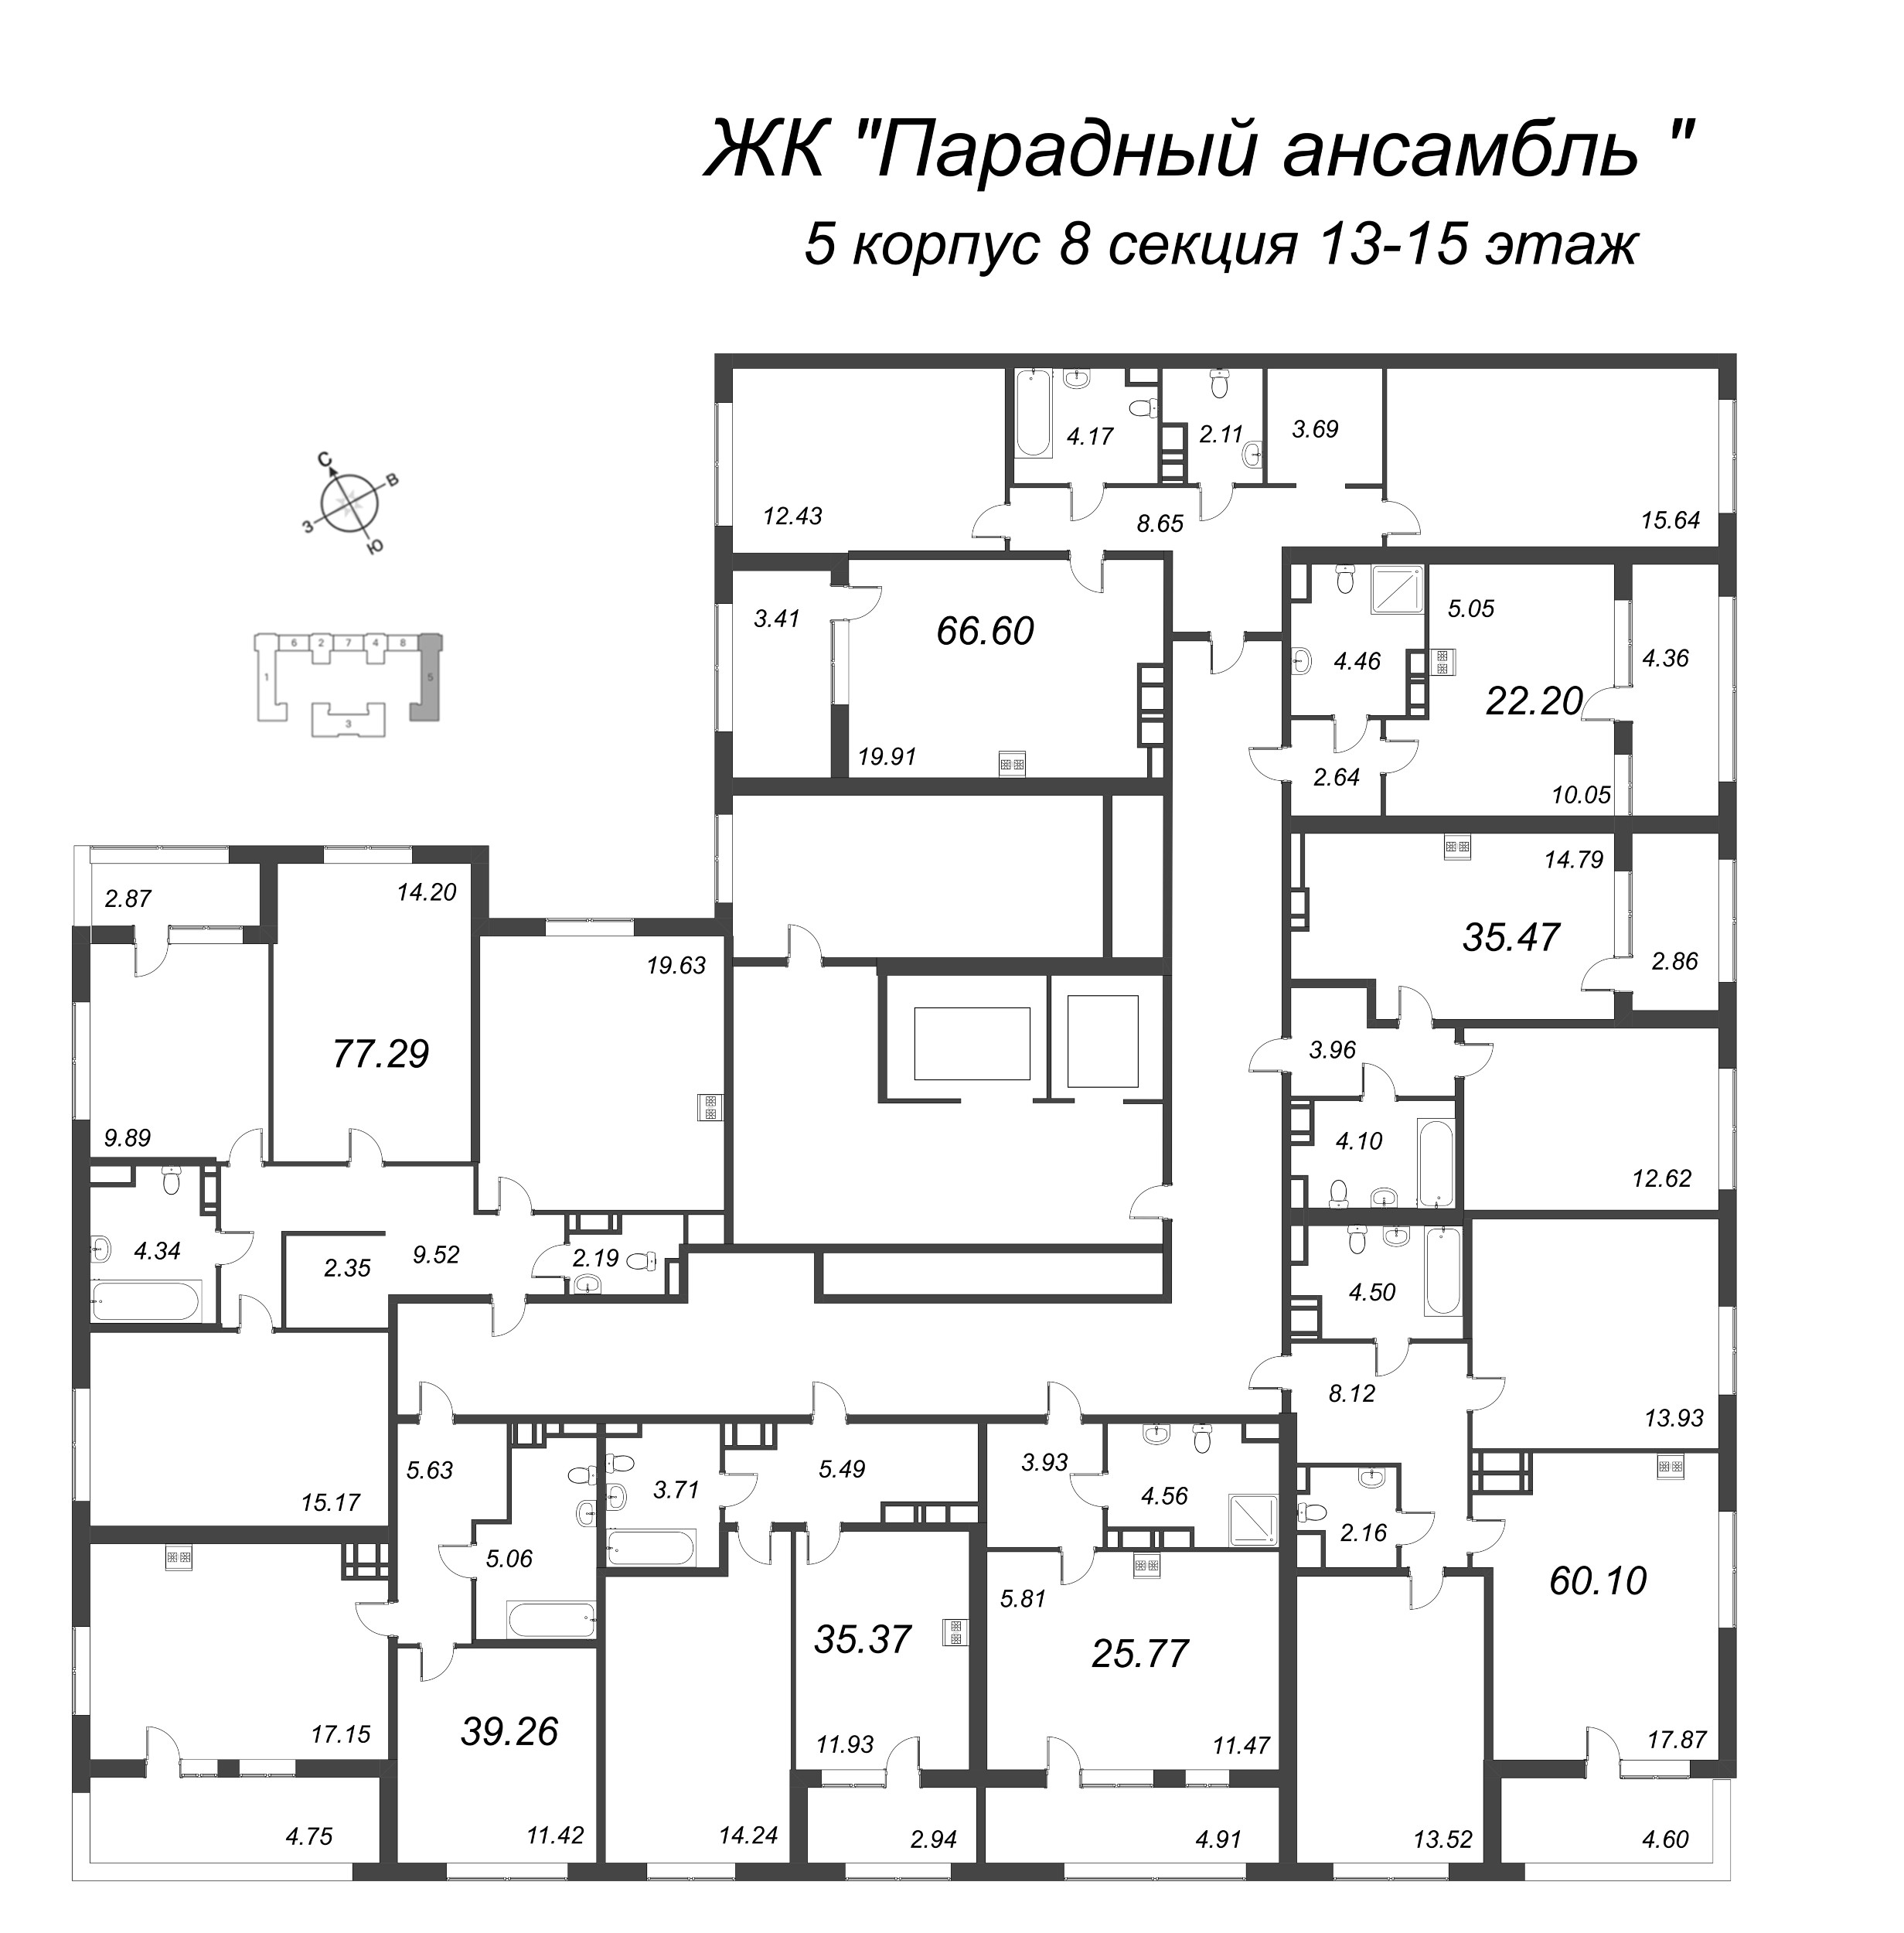 2-комнатная (Евро) квартира, 35.47 м² - планировка этажа